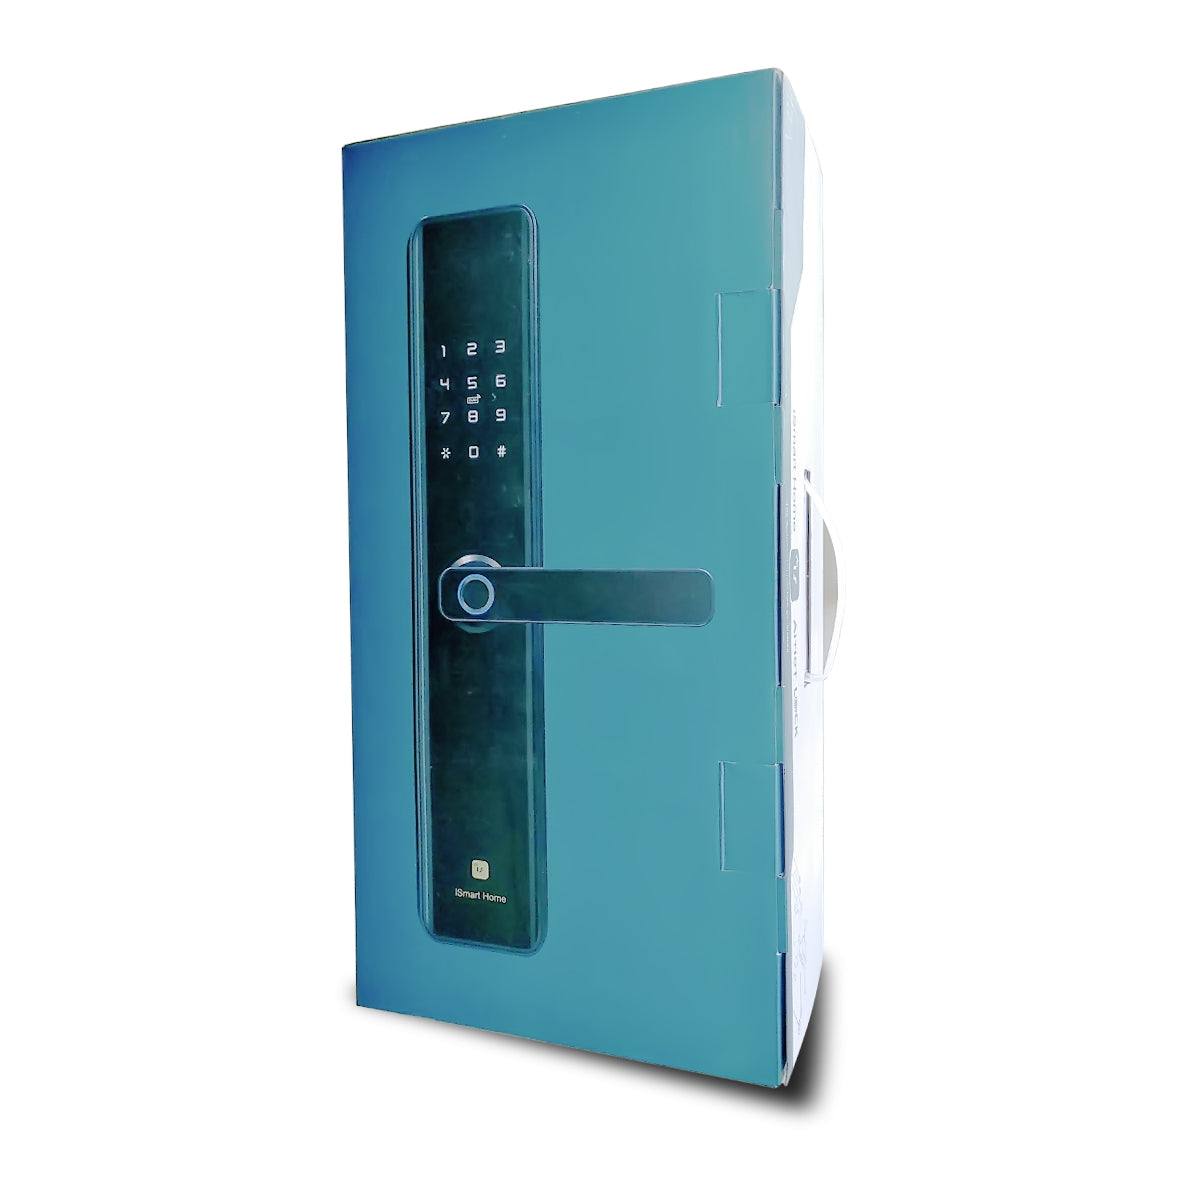 iSmart Home WiFi Smart Lock - Unlock Your Door with the Power of Technology